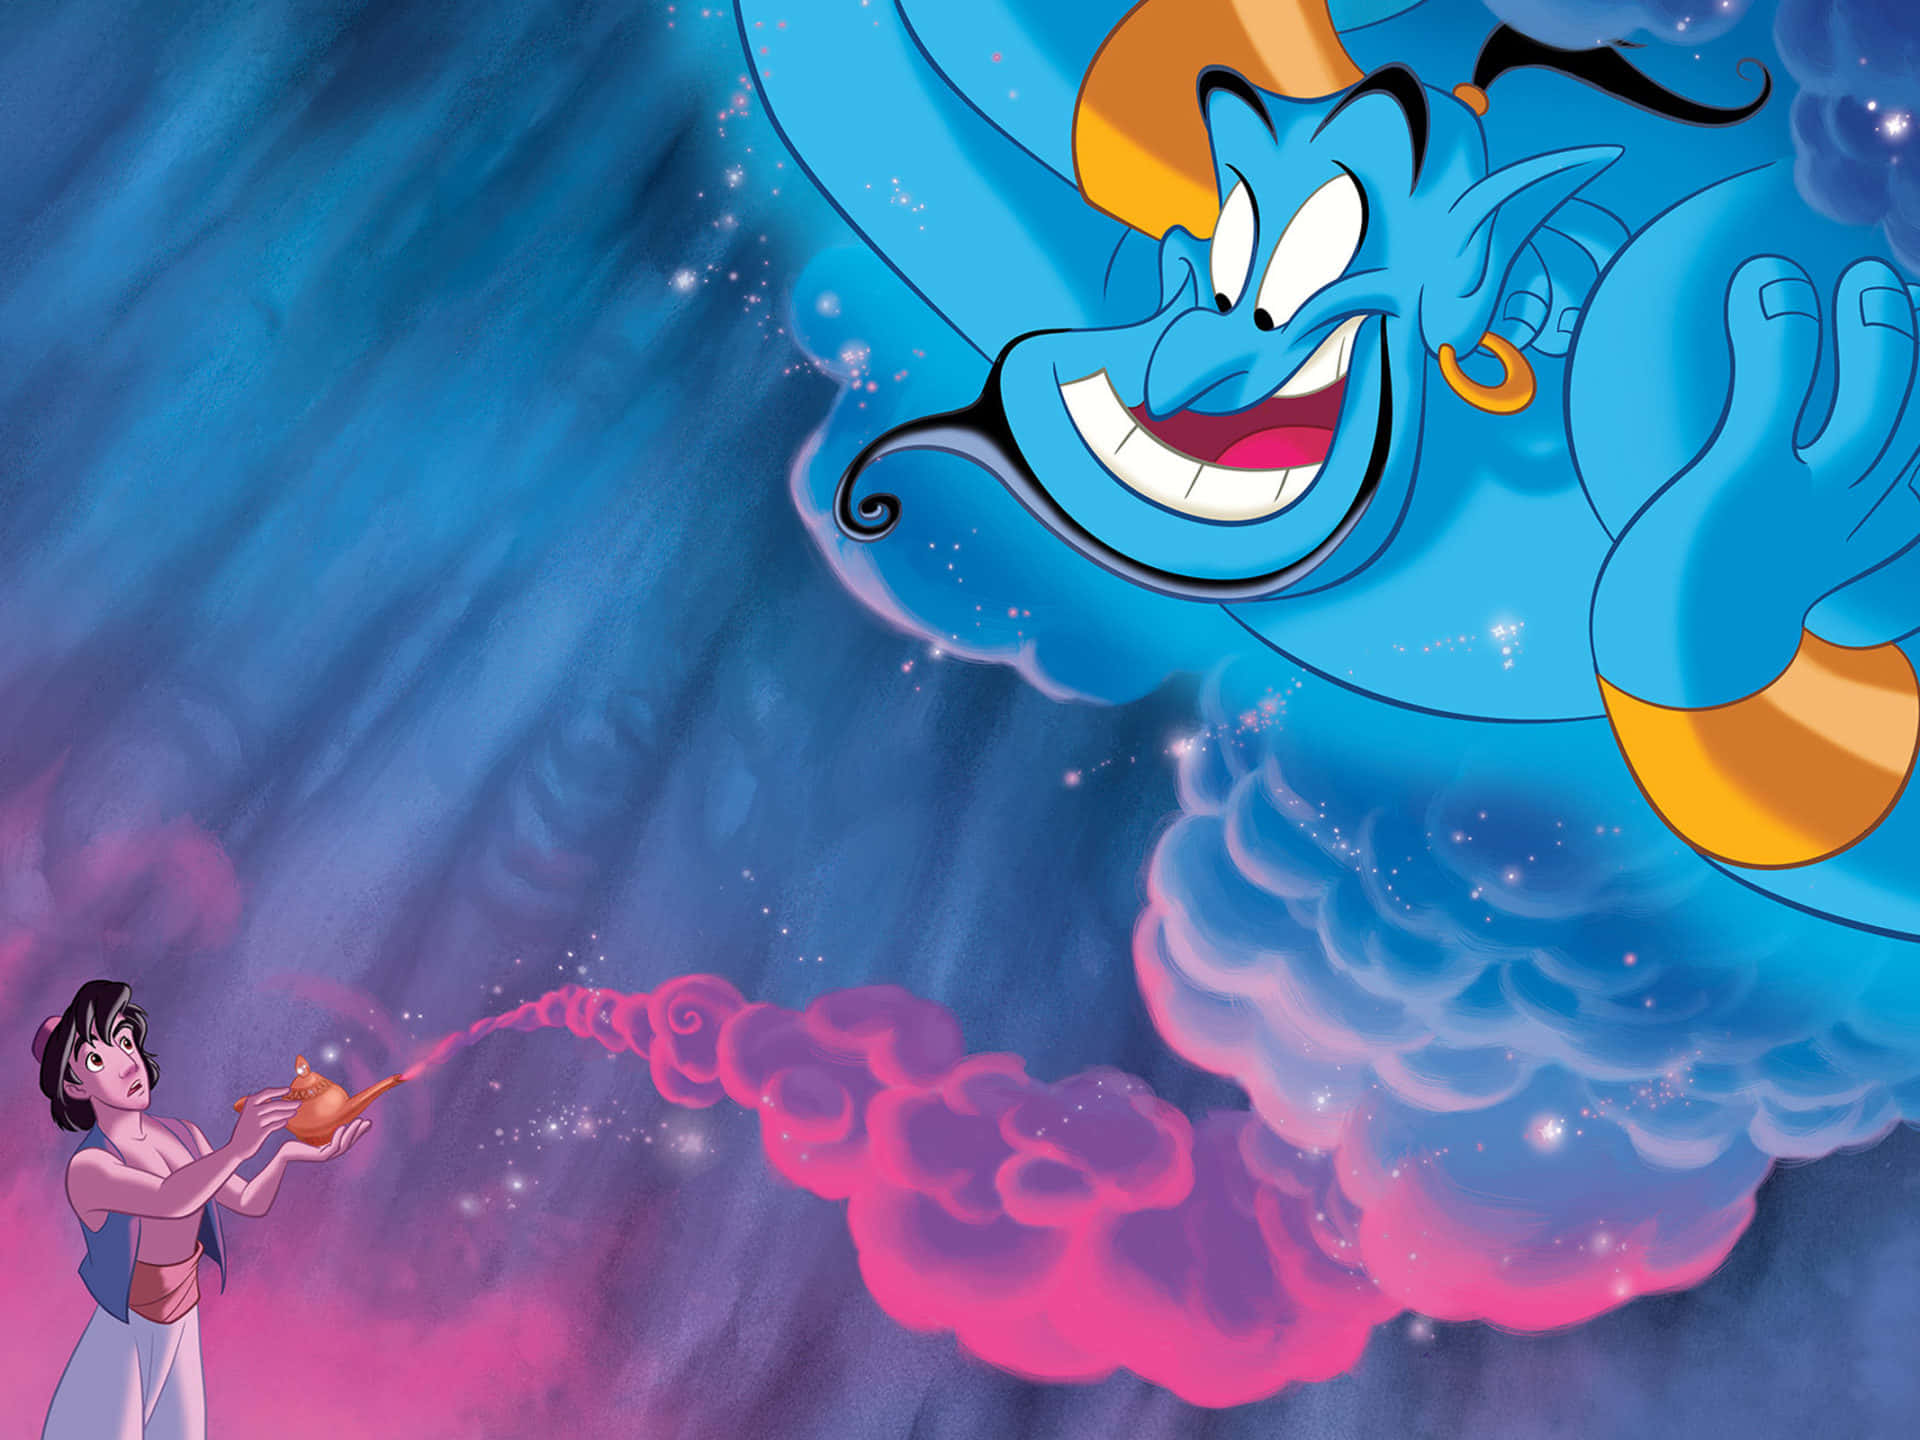 Go on a magical journey with Aladdin!